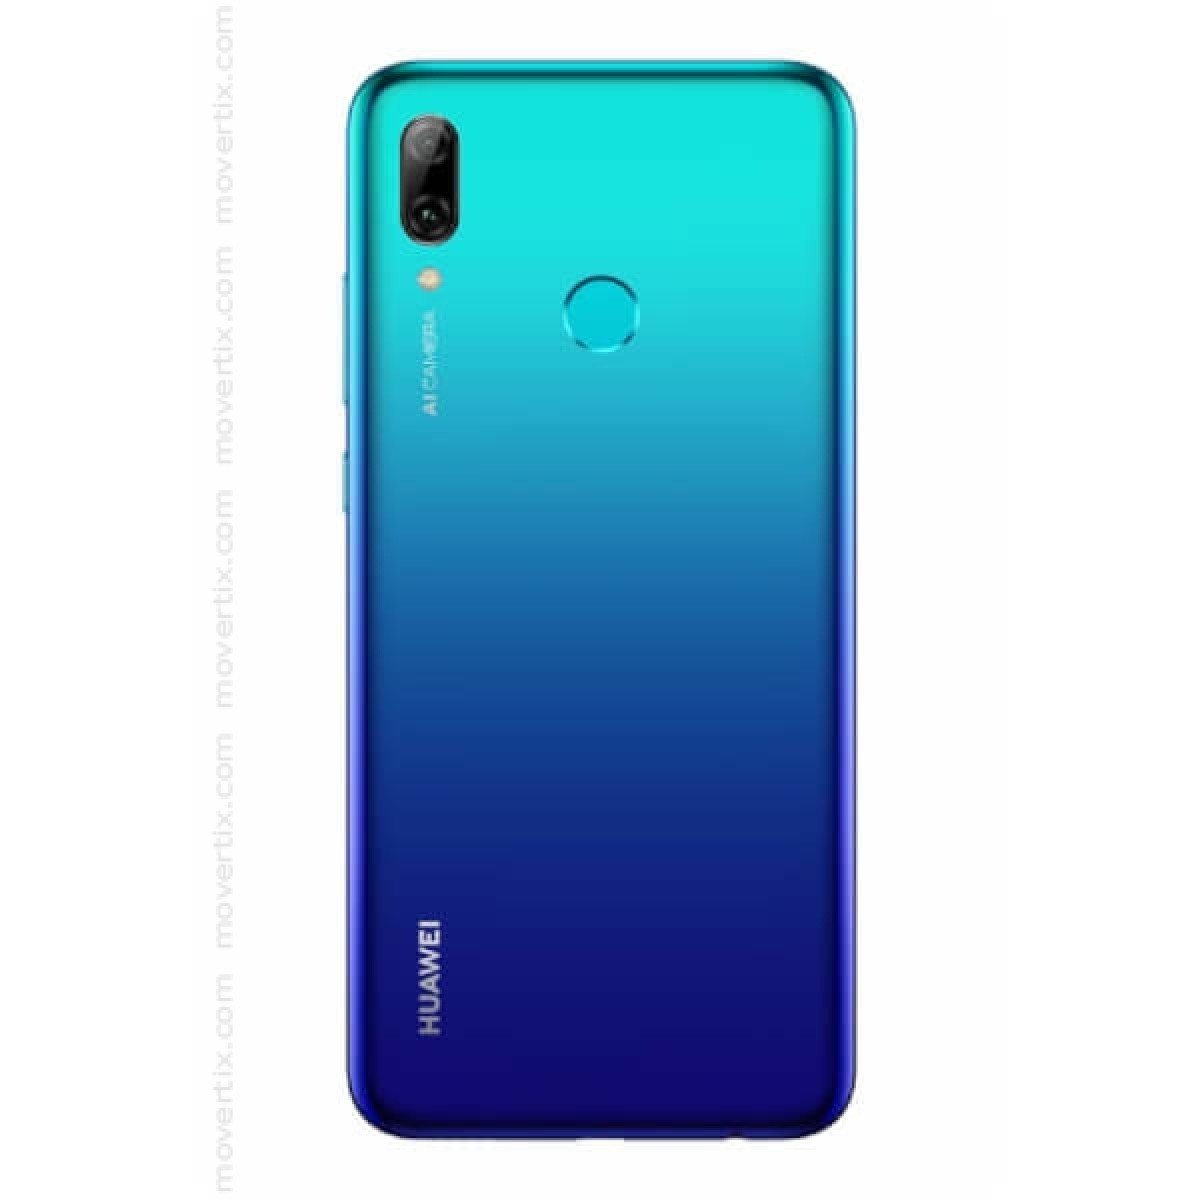 Huawei p smart 2019 manuale italiano